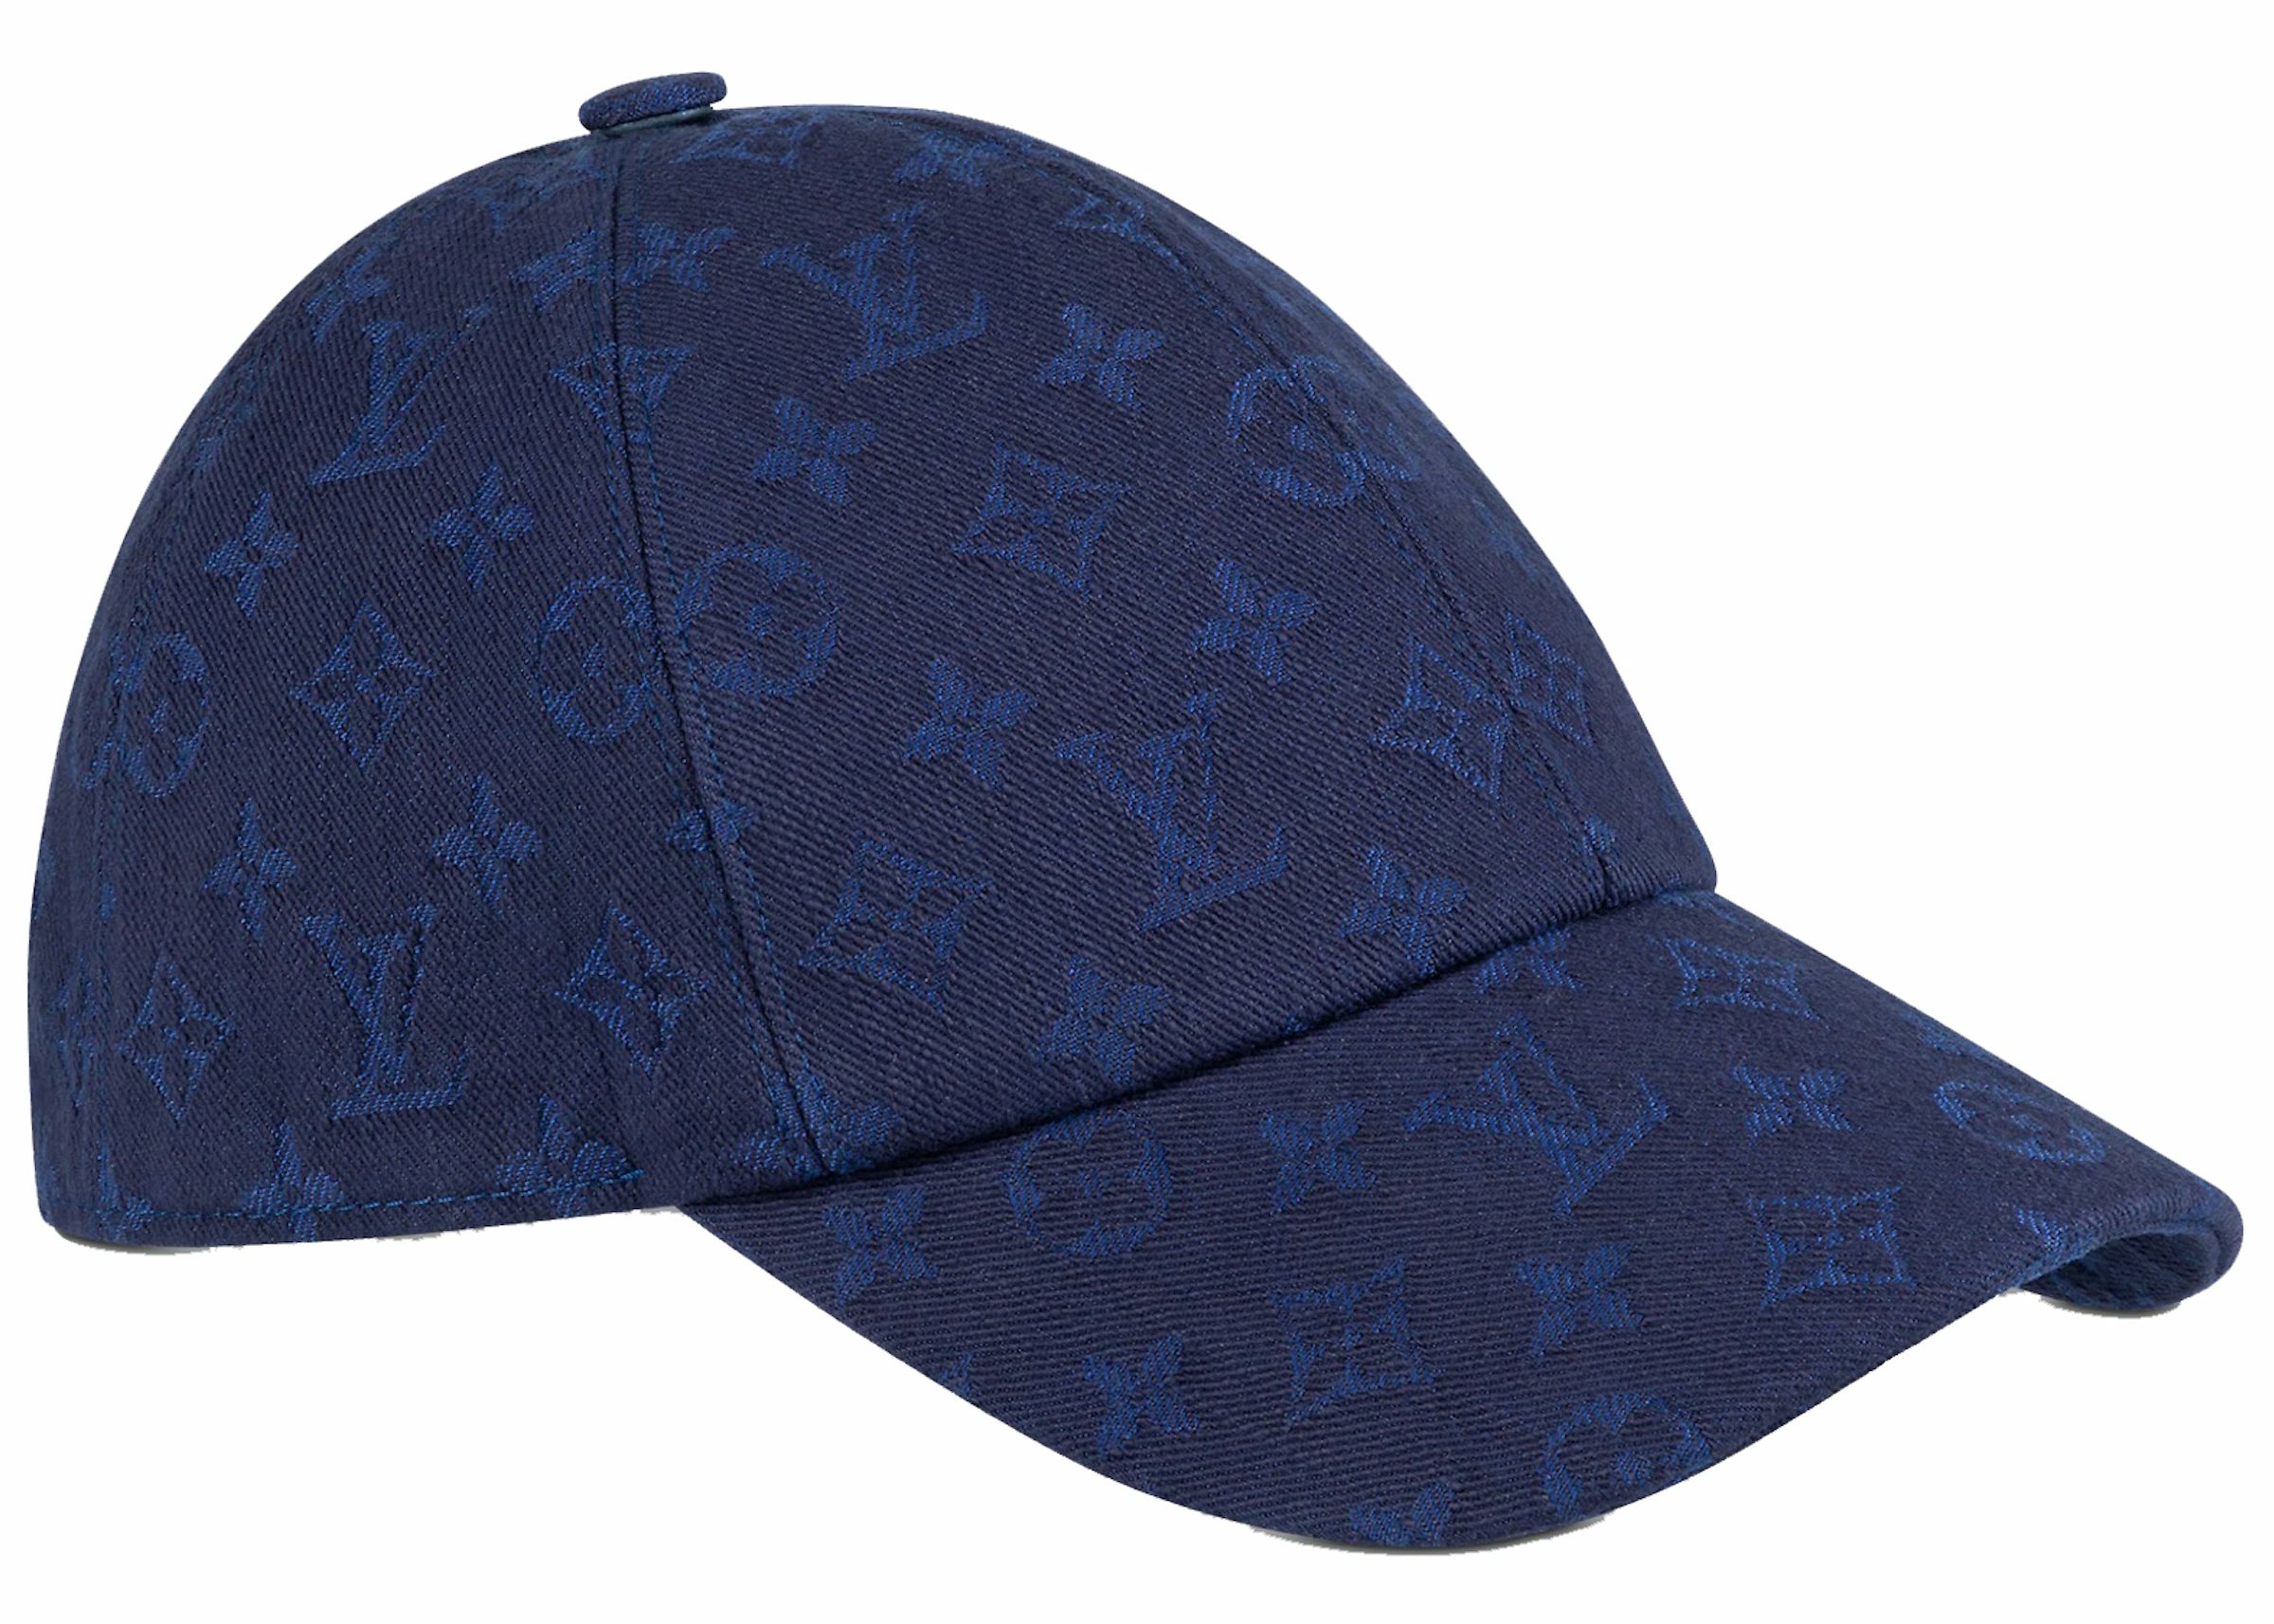 LOUIS VUITTON VARSITY HAT/SCARF SET - BLACK/BLUE – CLB XXIII